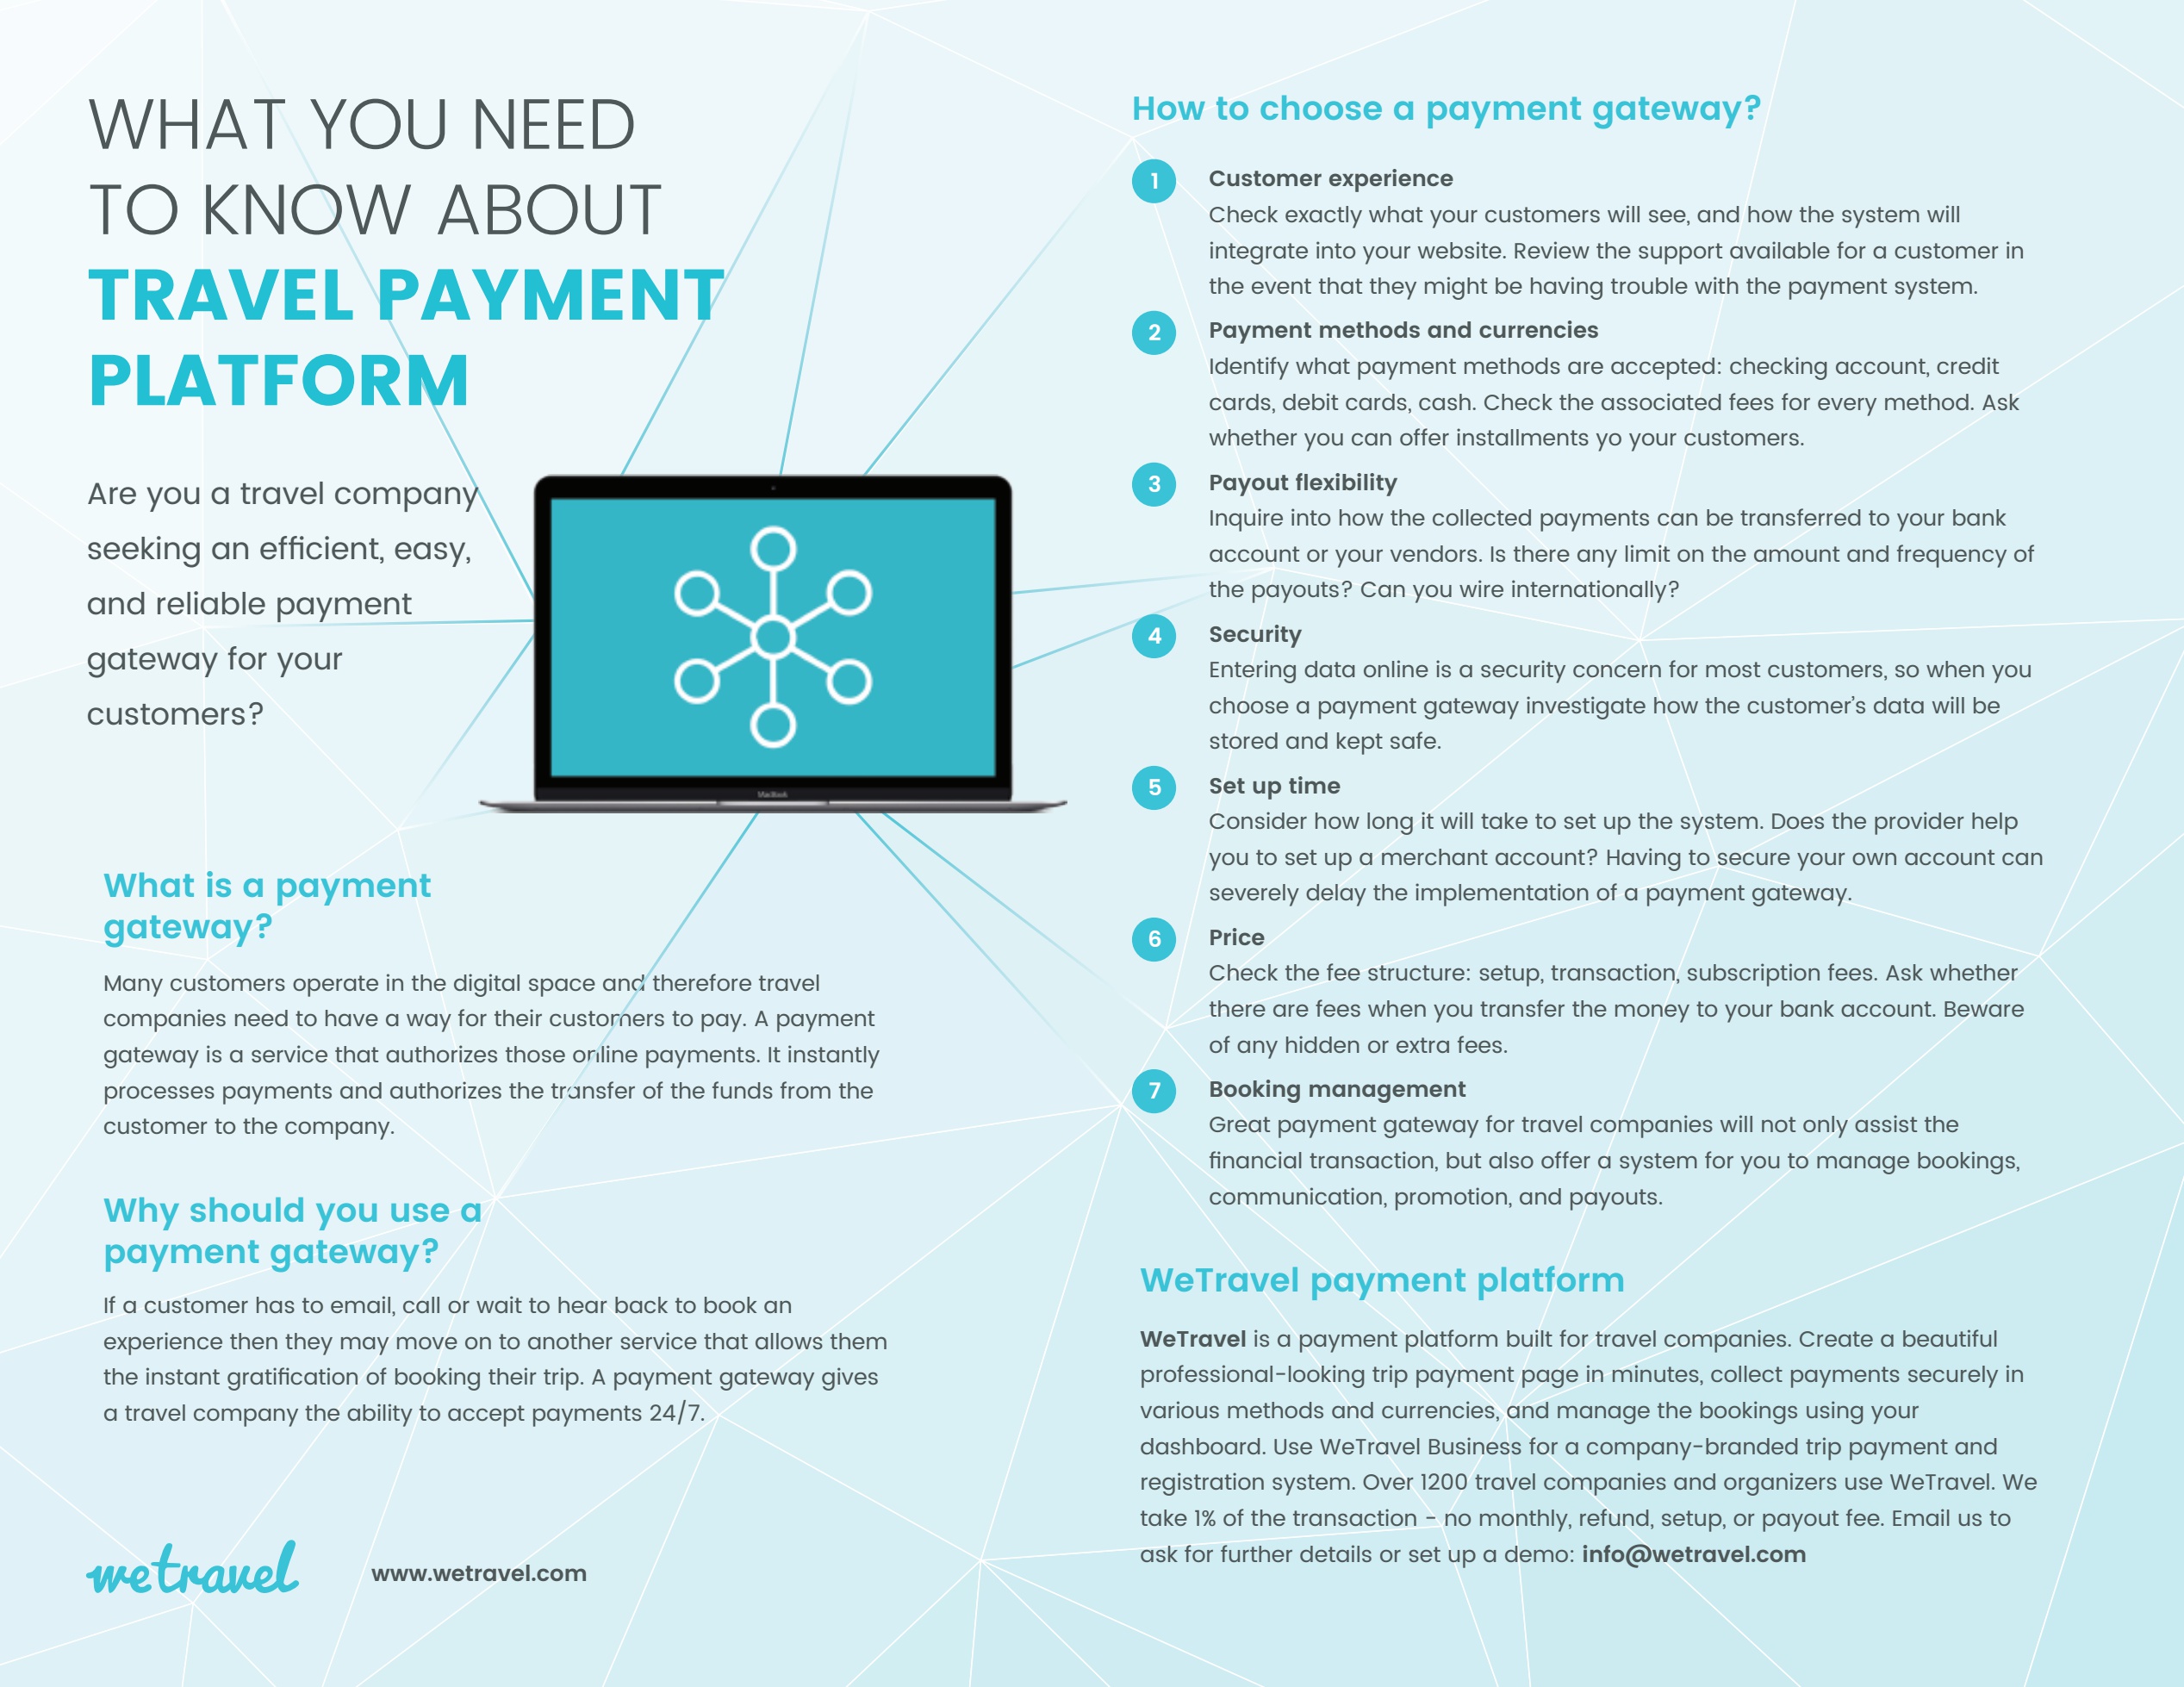 WeTravel Payment Platform